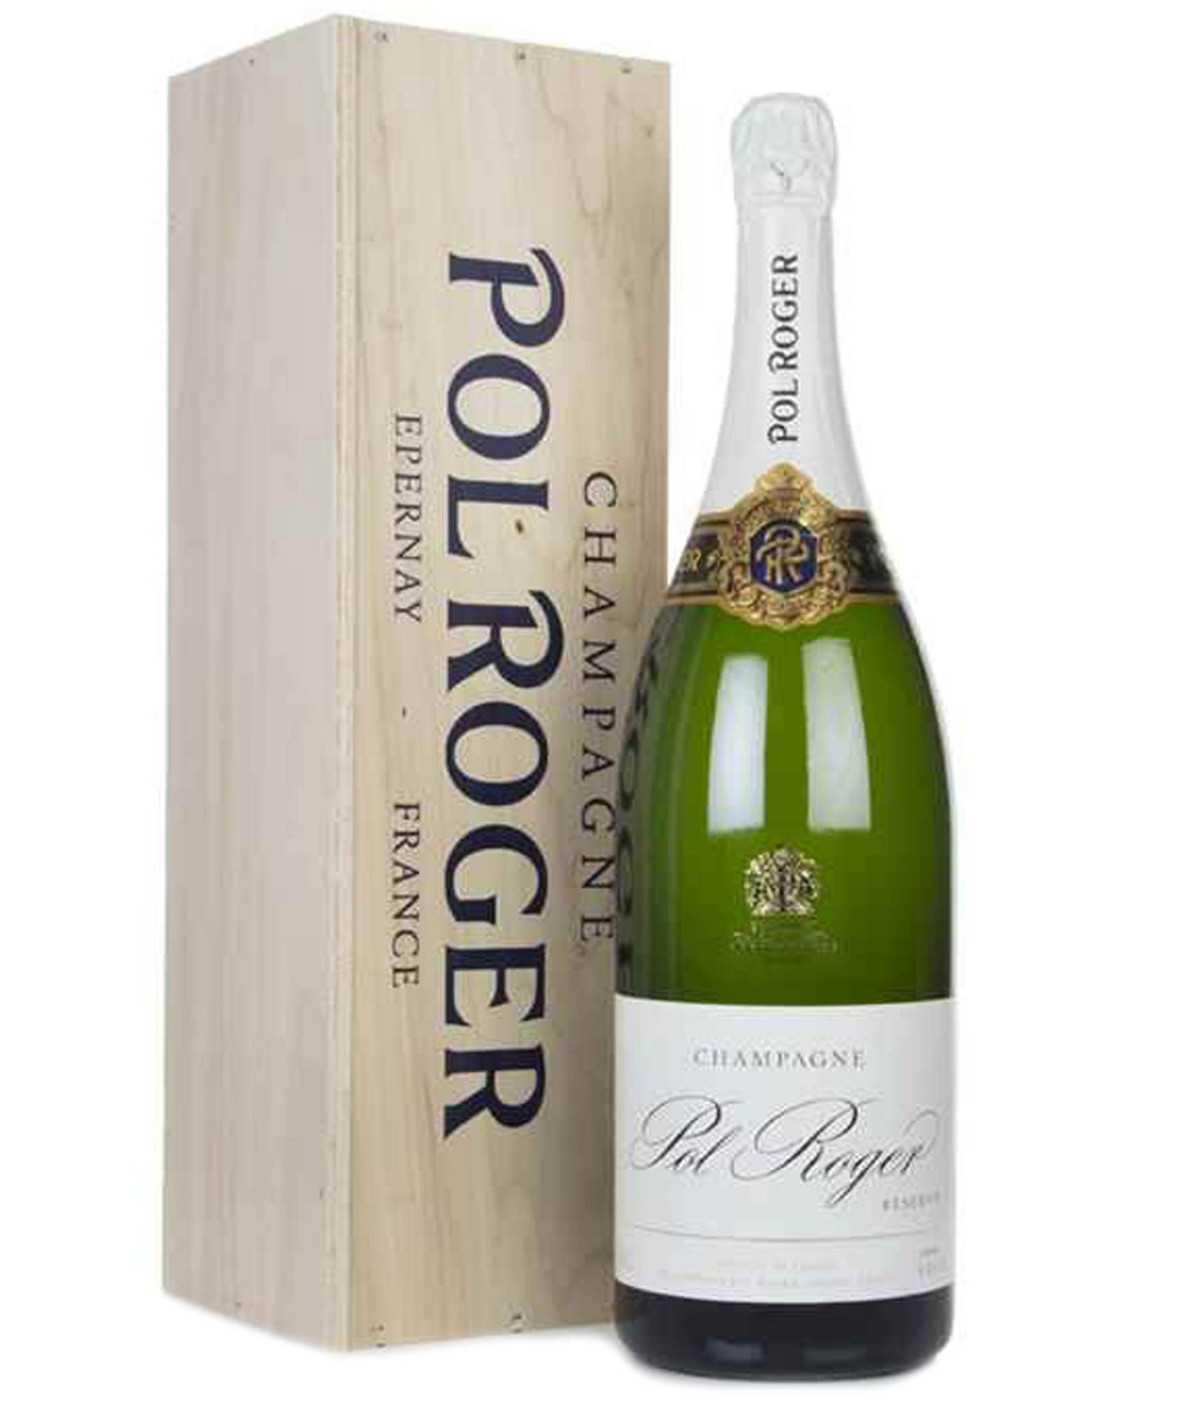 Mathusalema of POL ROGER Champagne Réserve Brut